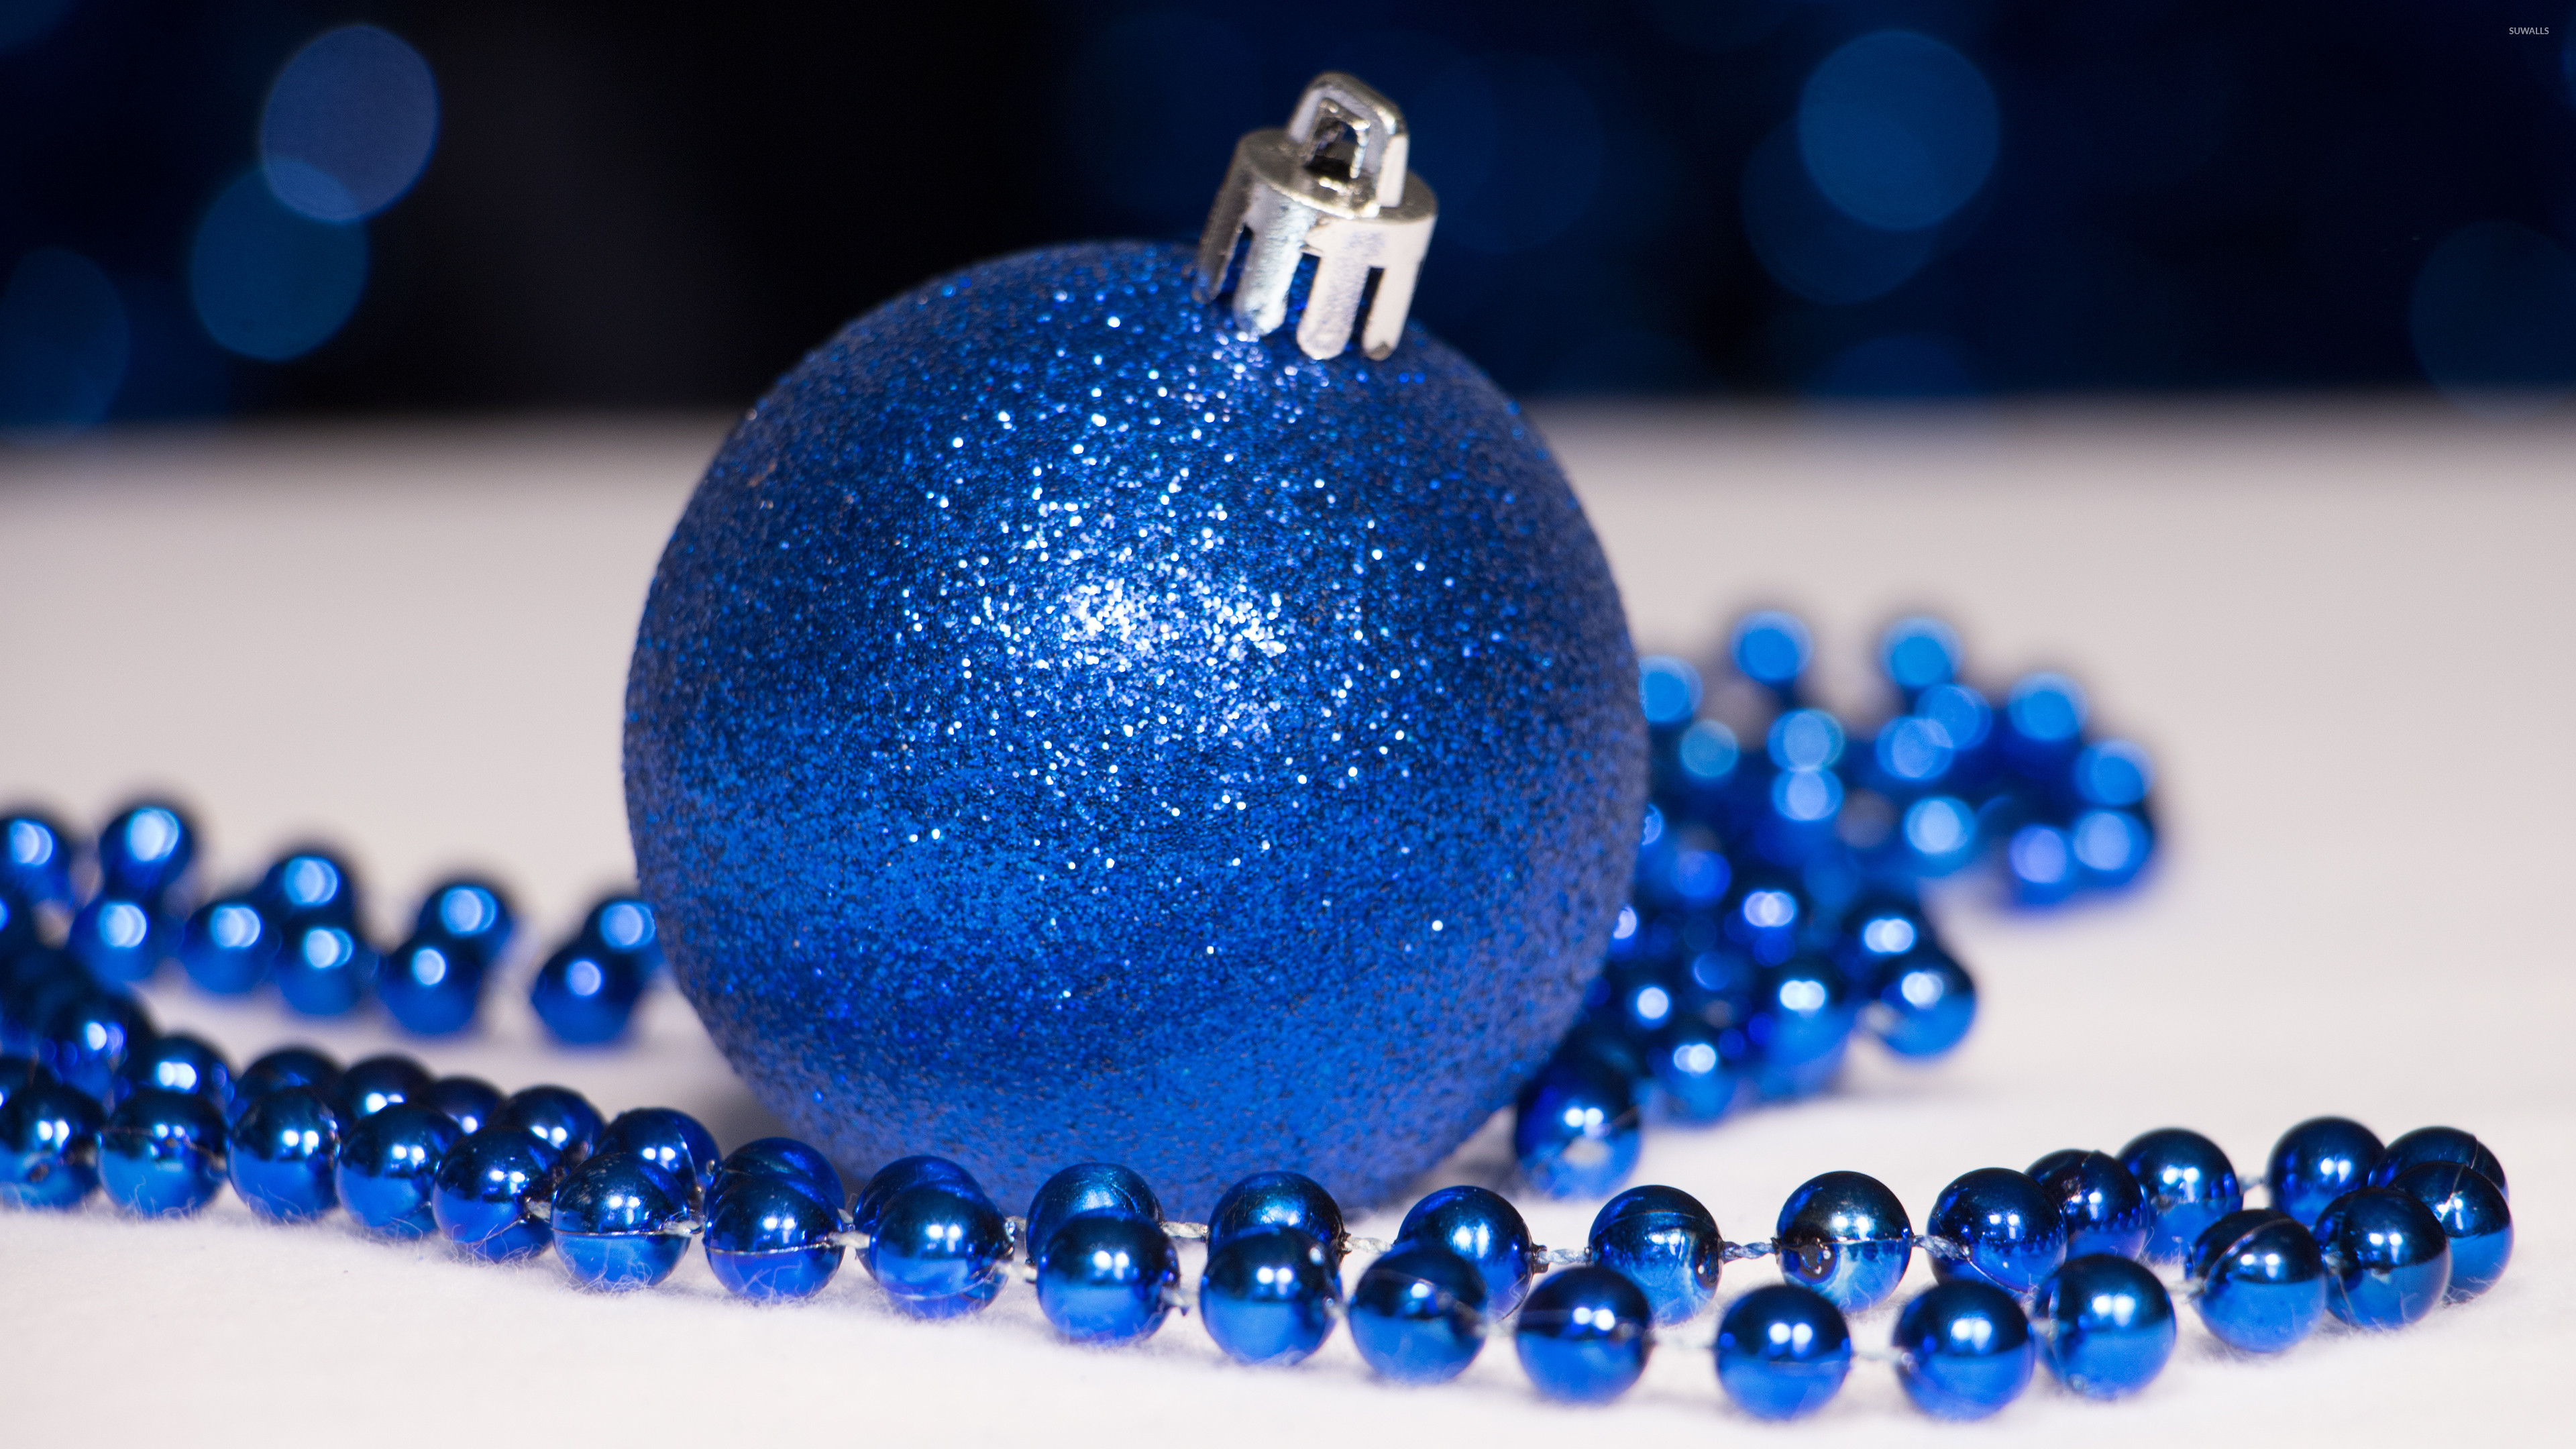 3840x2160 Blue Christmas ornaments wallpaper